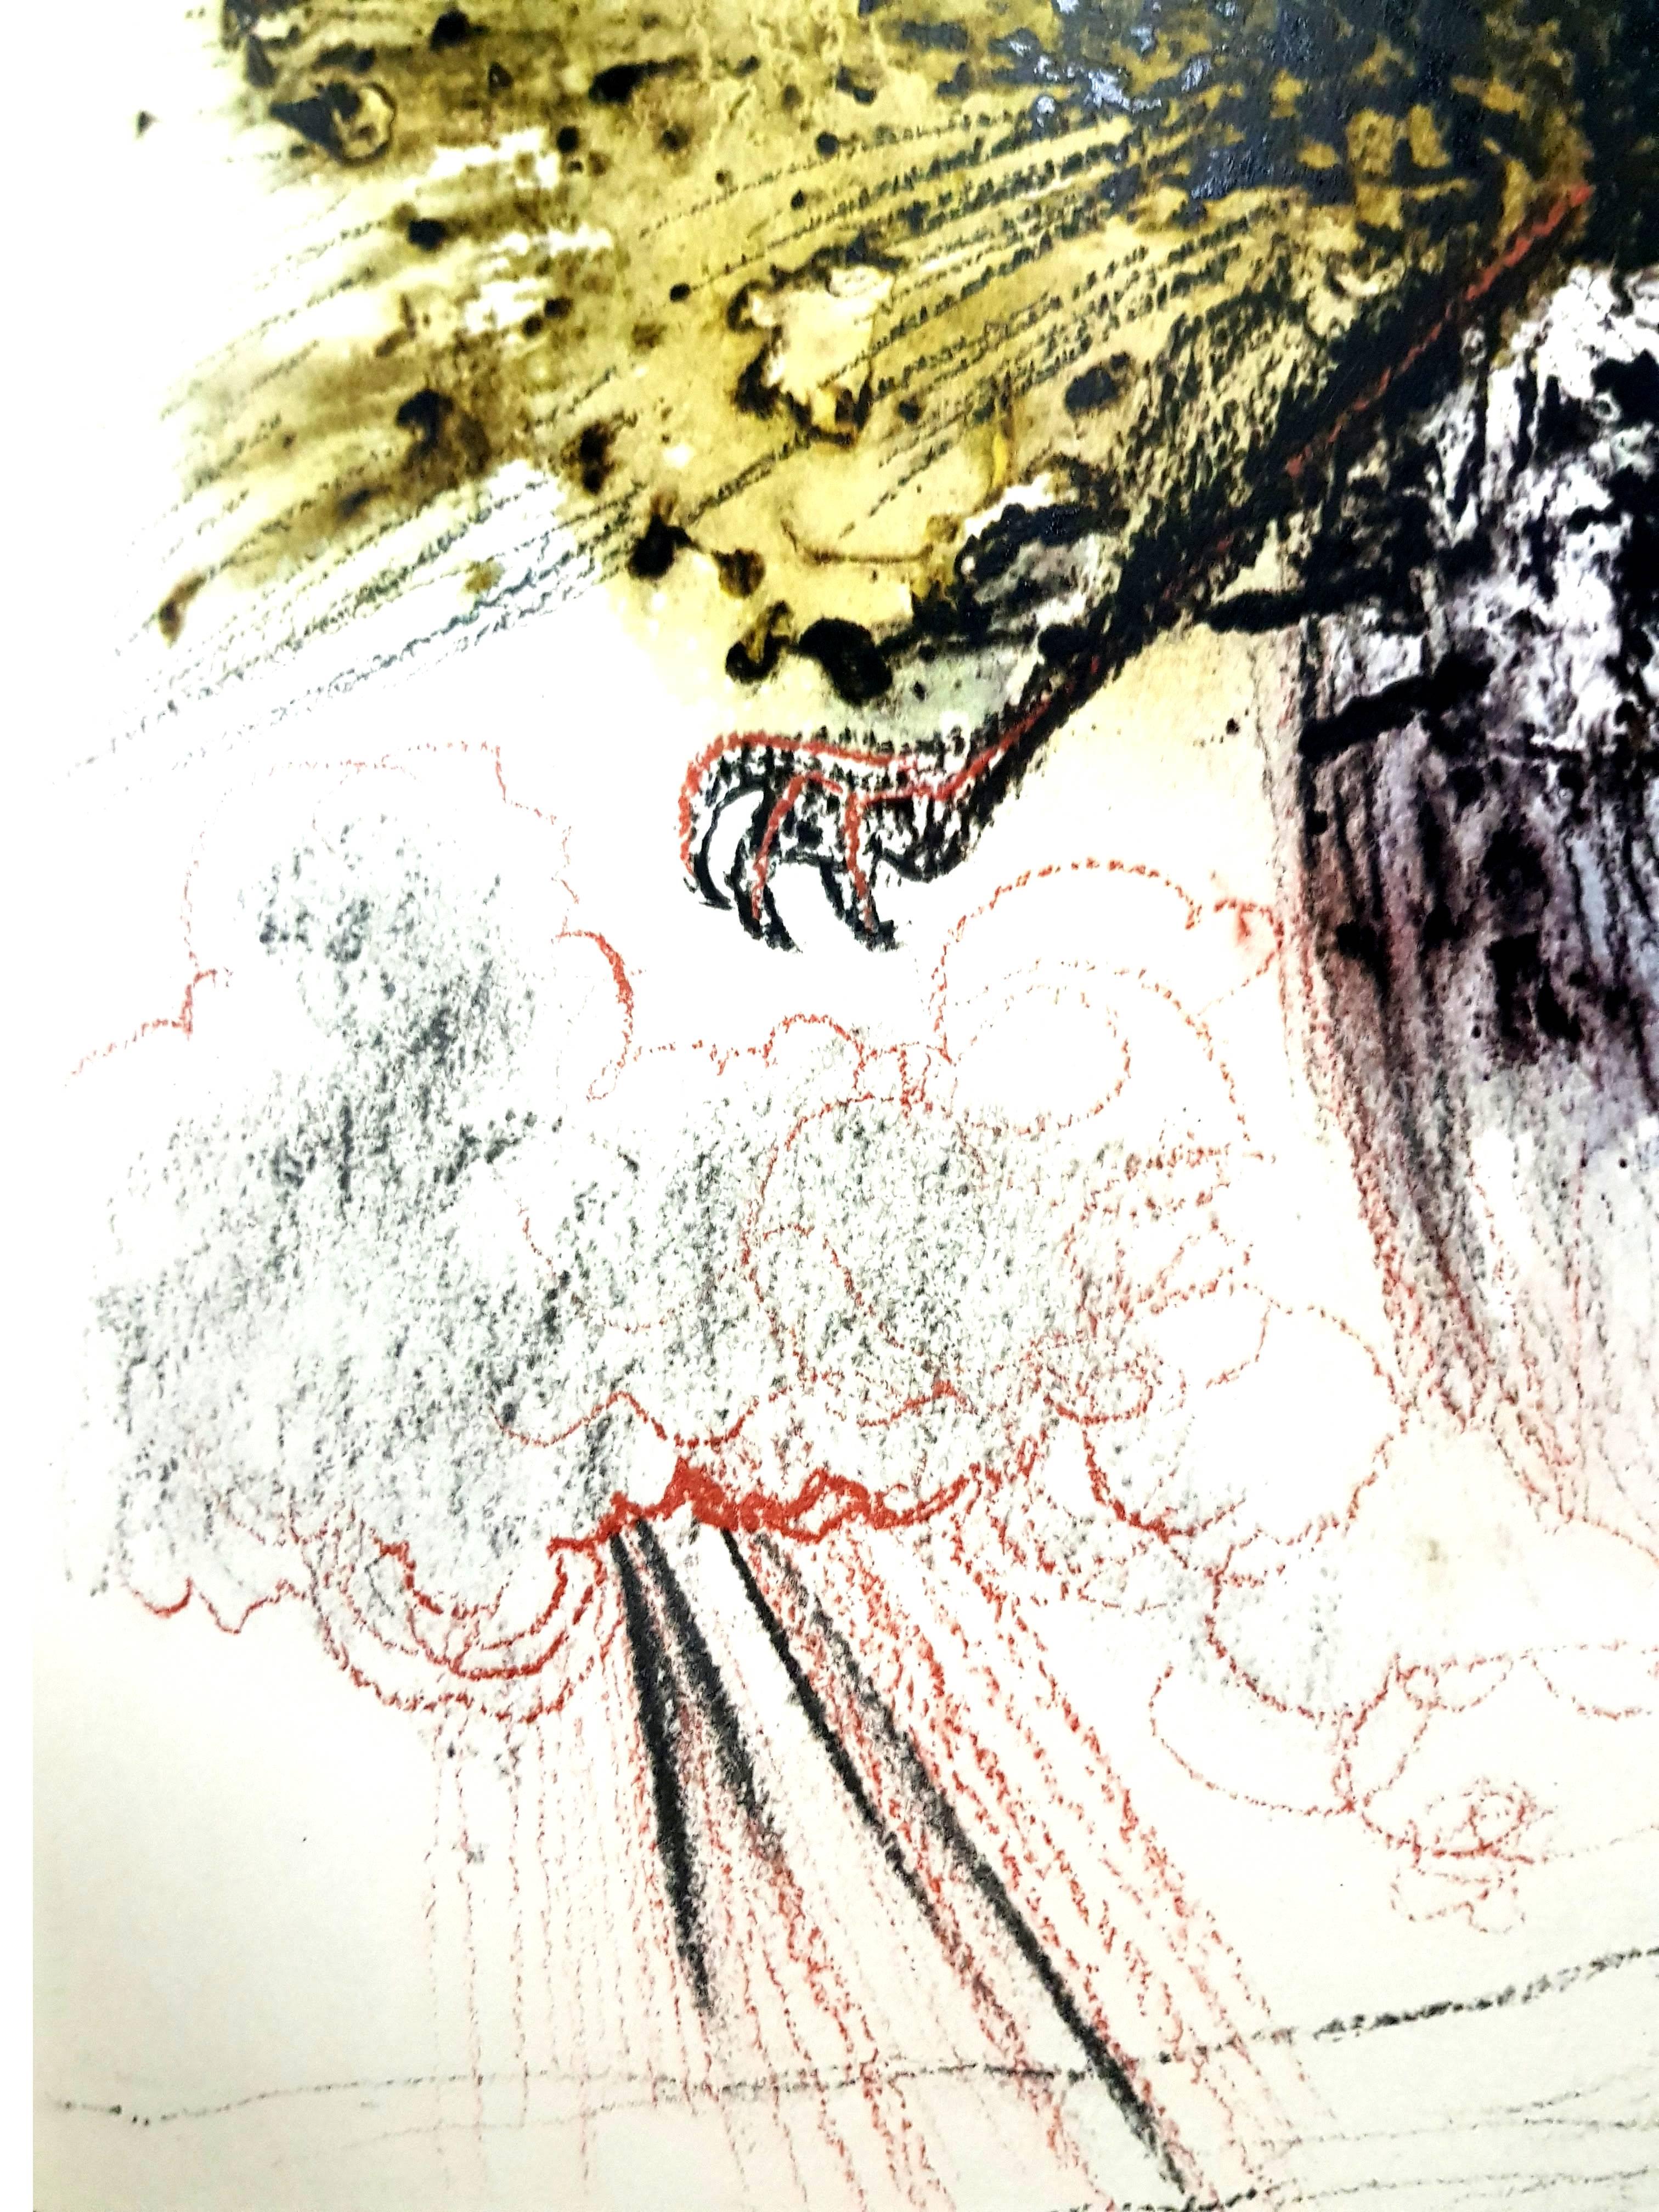 Salvador Dali - Biblia Sacra - Offset Lithograph - Surrealist Print by Salvador Dalí